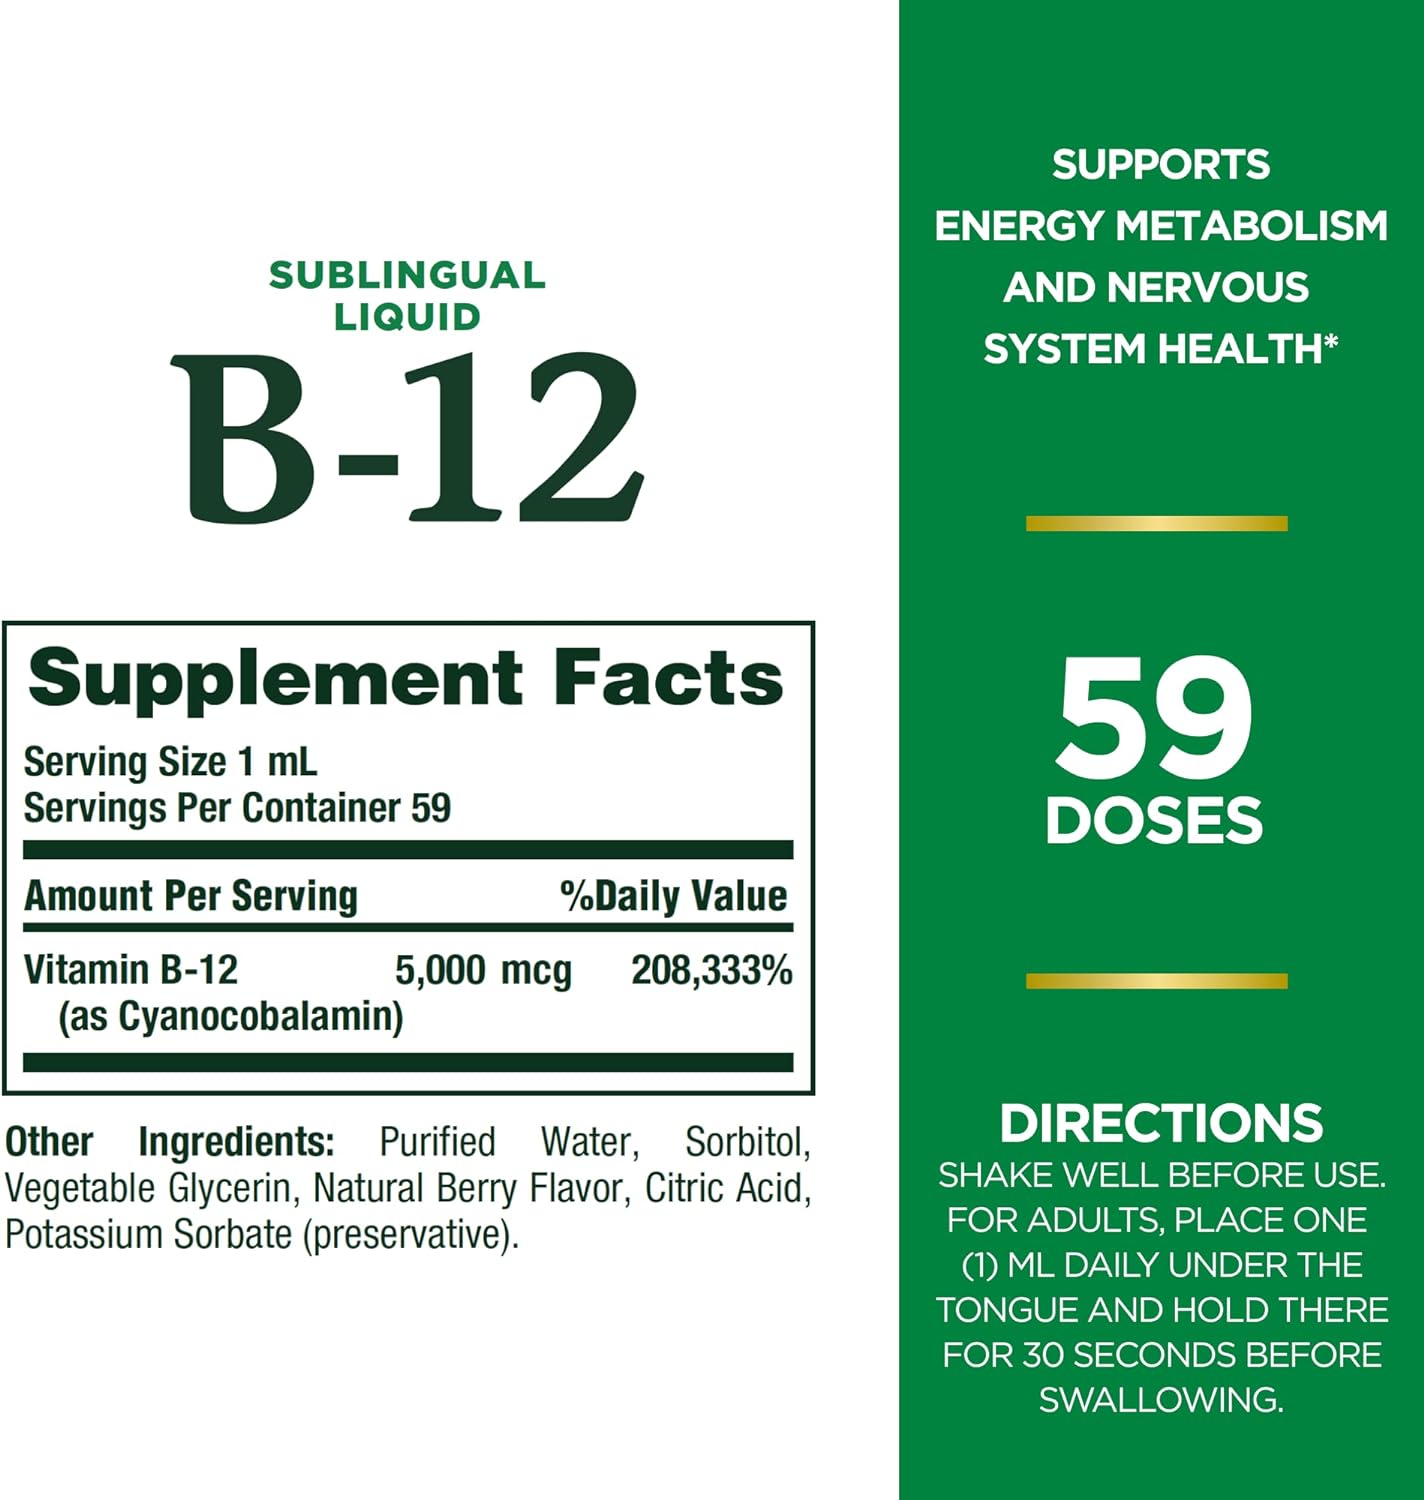 Nature's Bounty Vitamin B12 5000 Mcg Sublingual Liquid, Cardiovascular Health & Cellular Energy Support, 2 Fl Oz (1 Count)